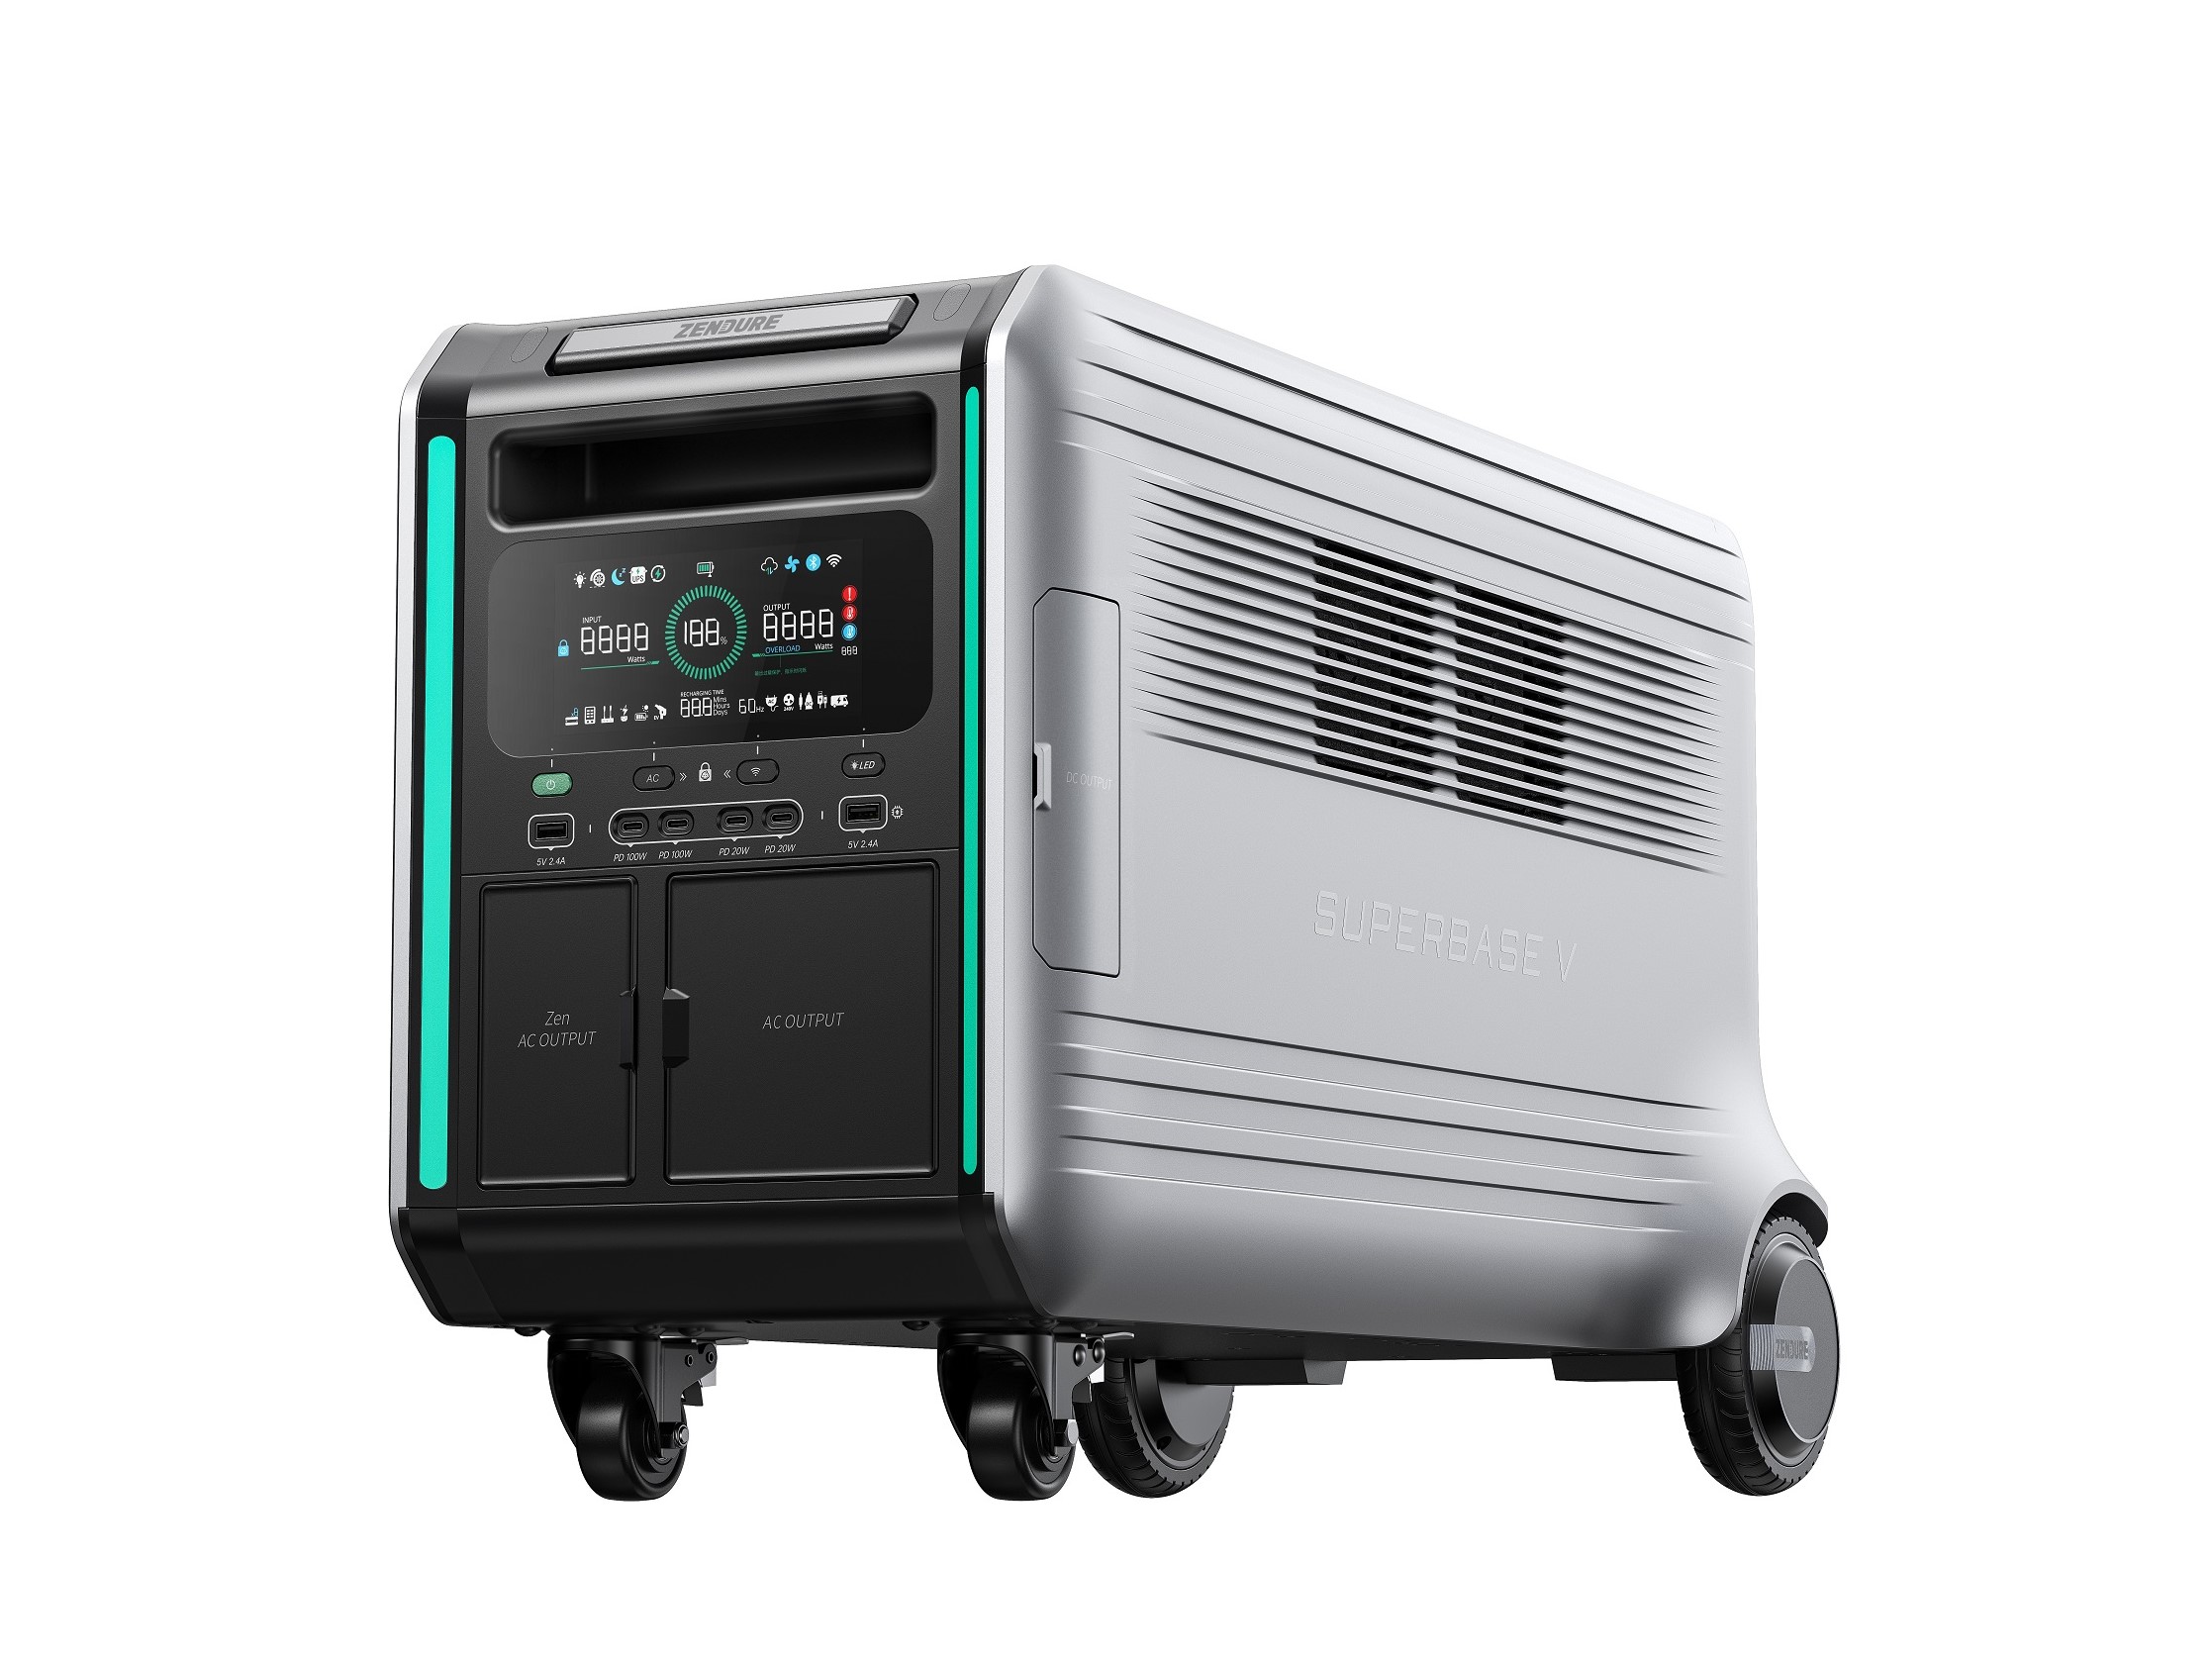 Bluetti's EB3A generator encapsulates smart power management